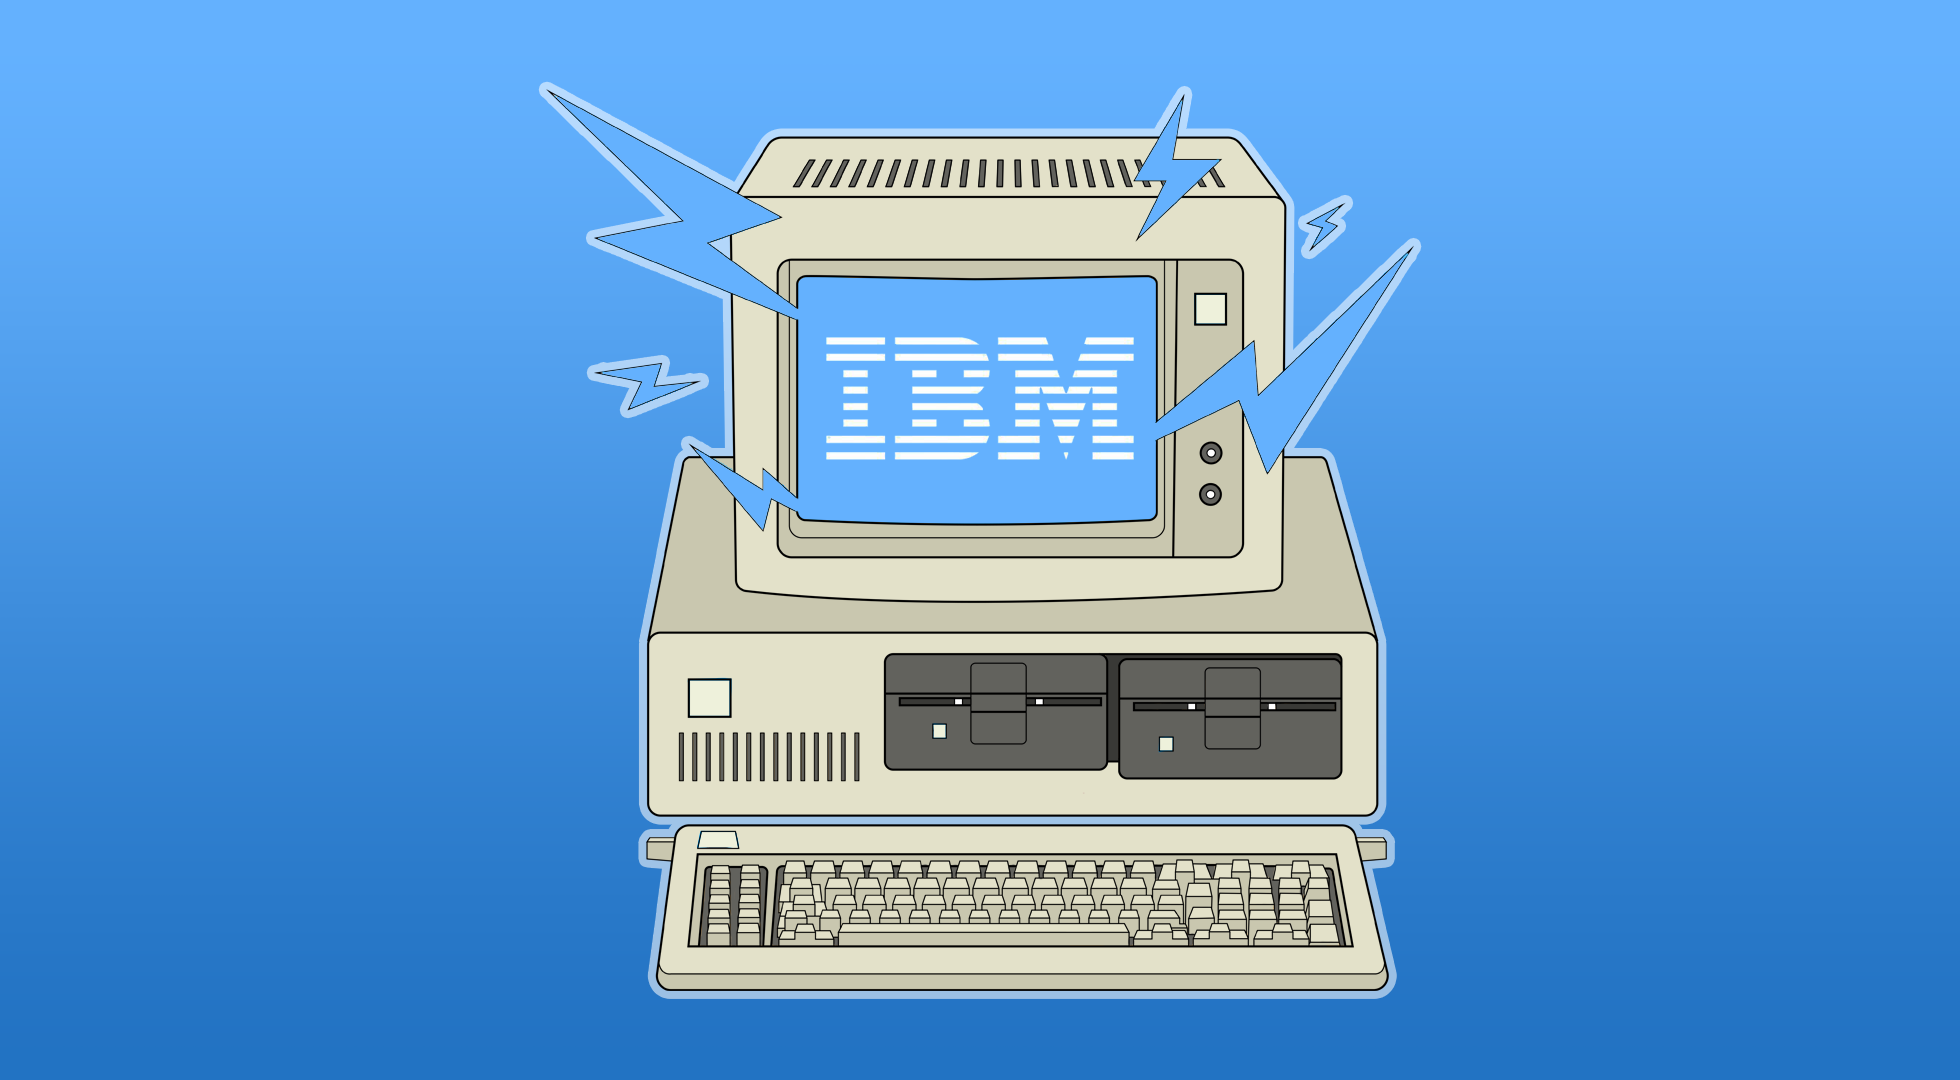 IBM PC illustration with IBM logo on blue gradient background